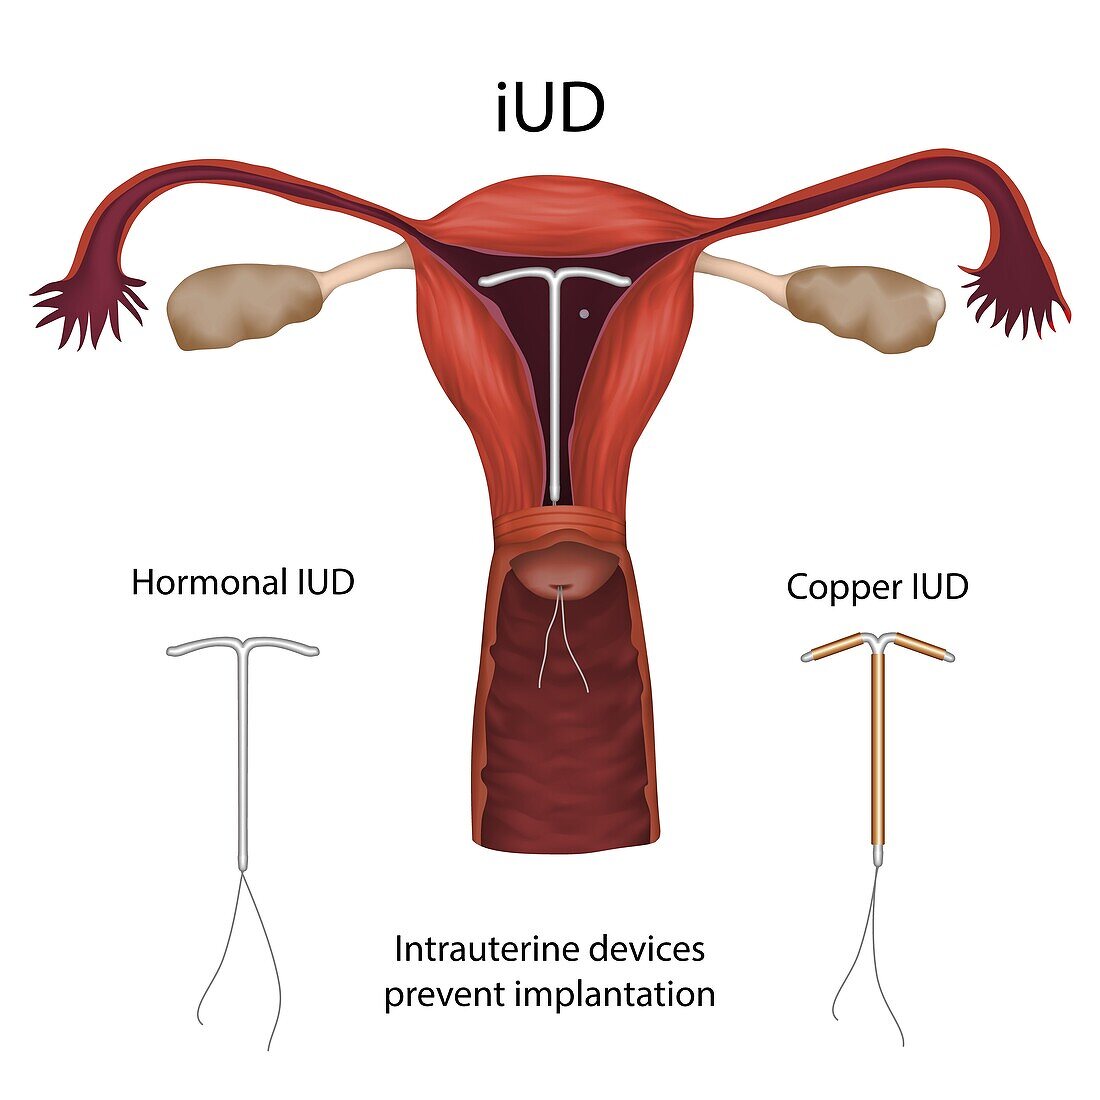 Intrauterine devices, illustration